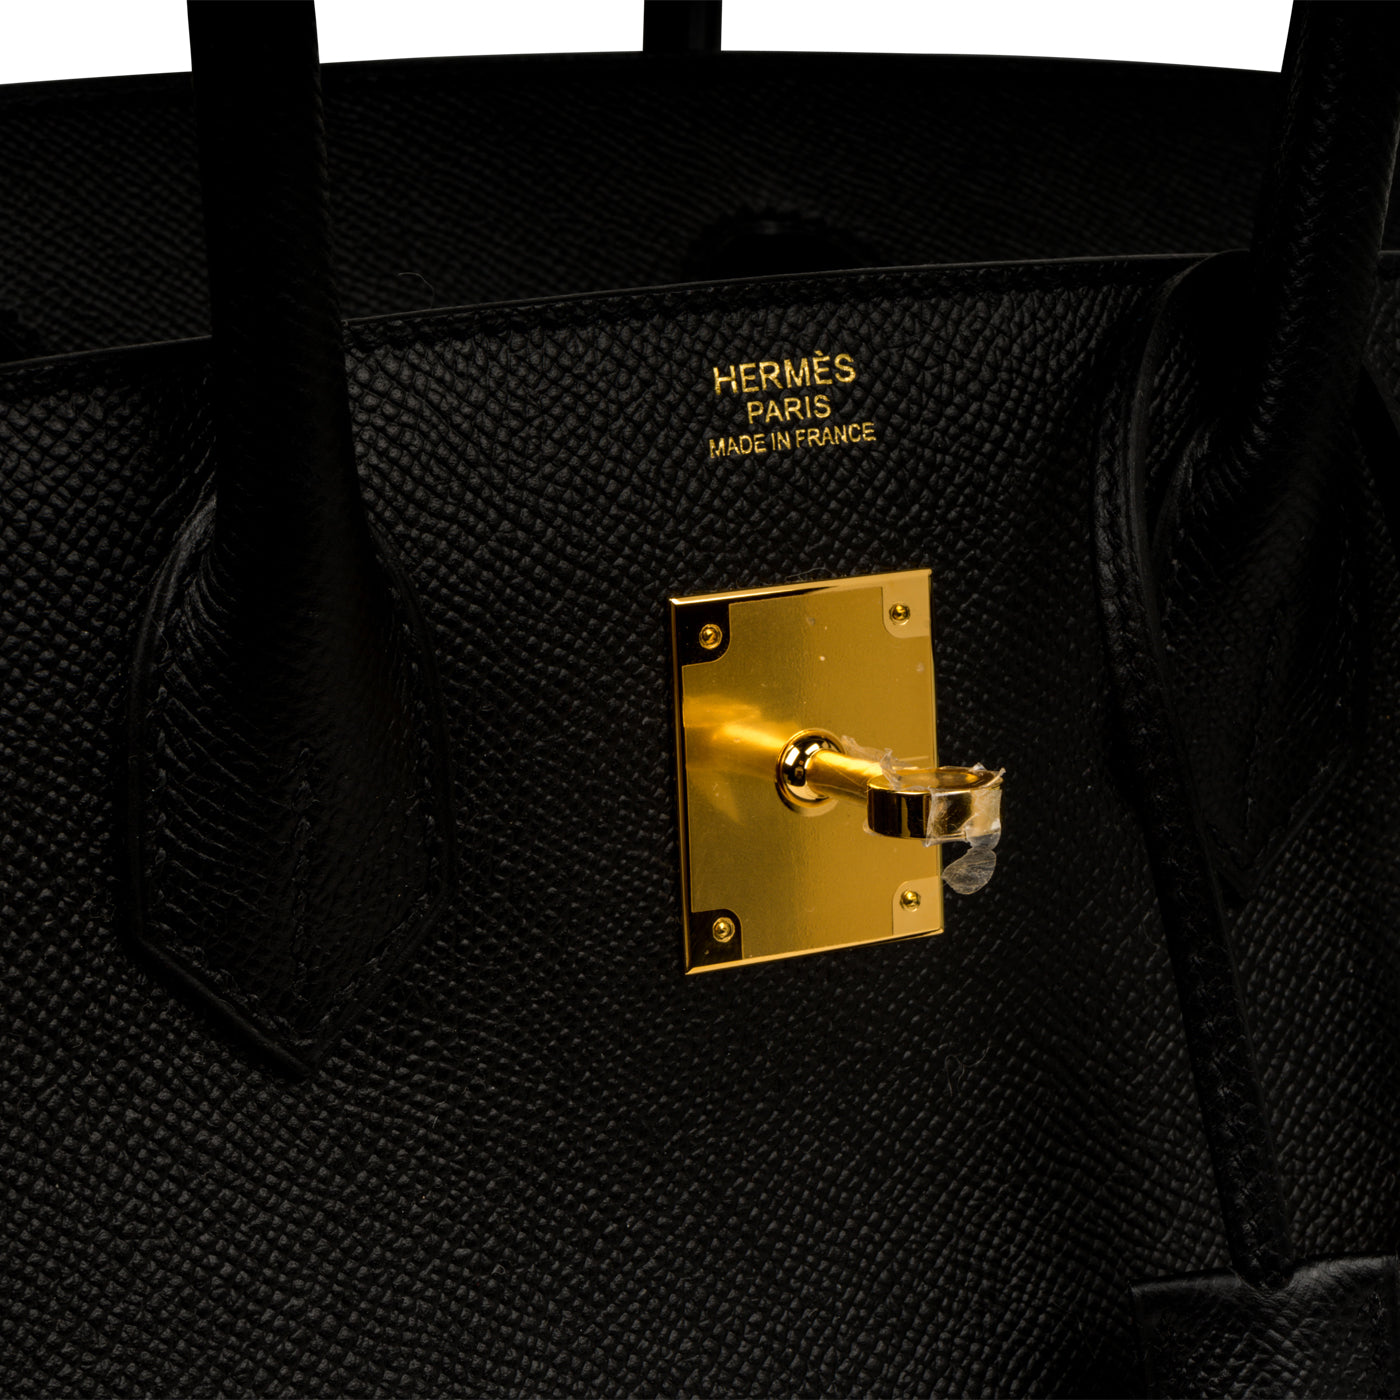 Hermès 30cm Birkin, Celeste Epsom Leather, Gold Hardware, 2020/Y 🌟 # hermes #birkin #priveporter #celeste